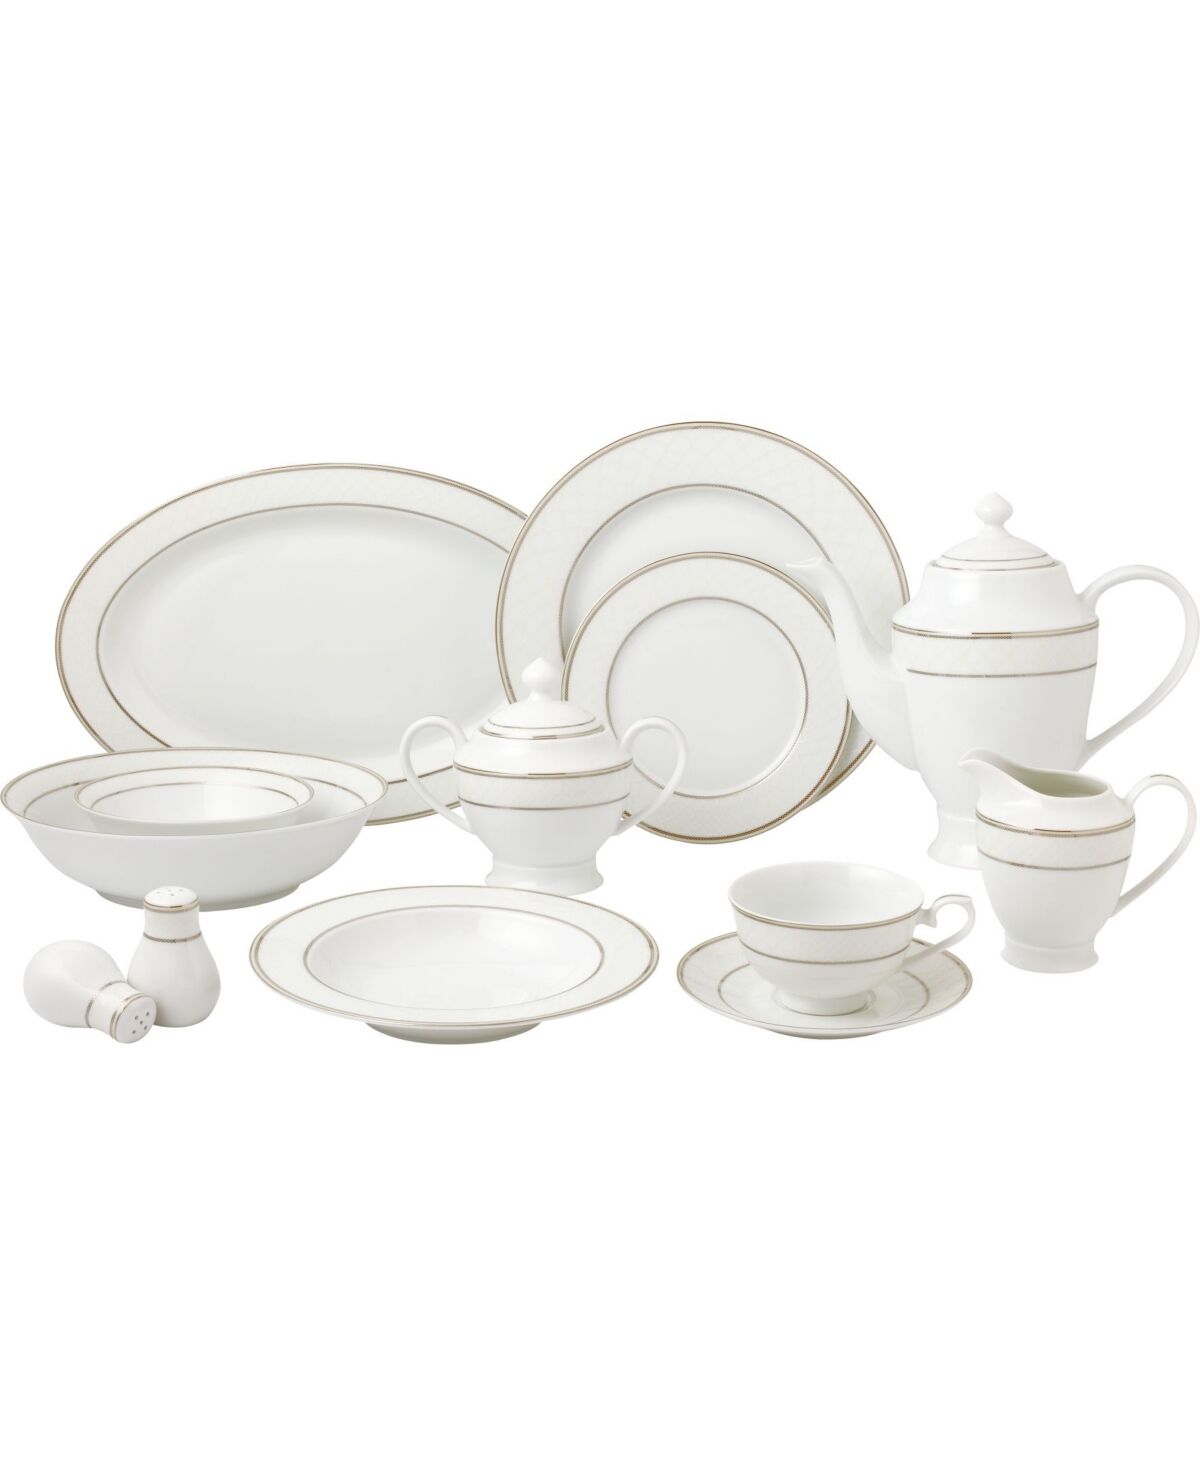 Lorren Home Trends New Bone China 57 Piece Dinnerware Set, Service for 8 - White